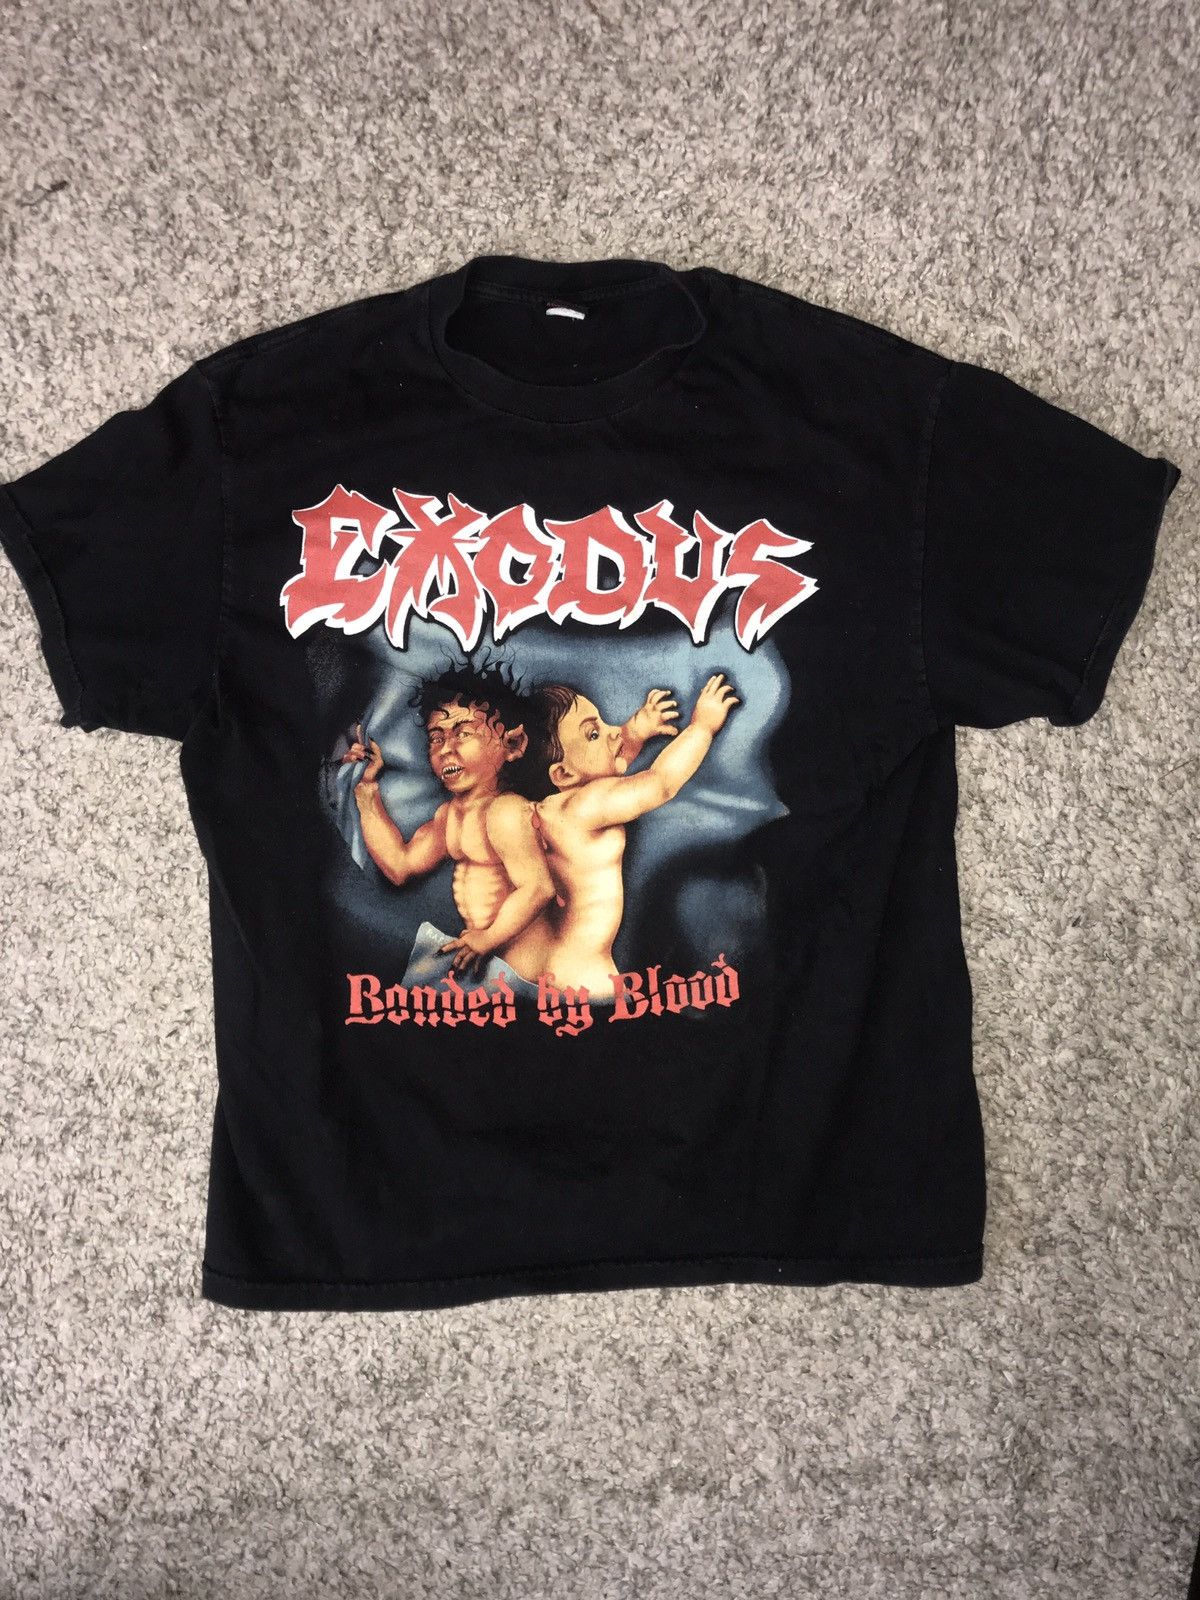 Vintage Exodus T-shirt vintage rock bonded by blood size S black | Grailed